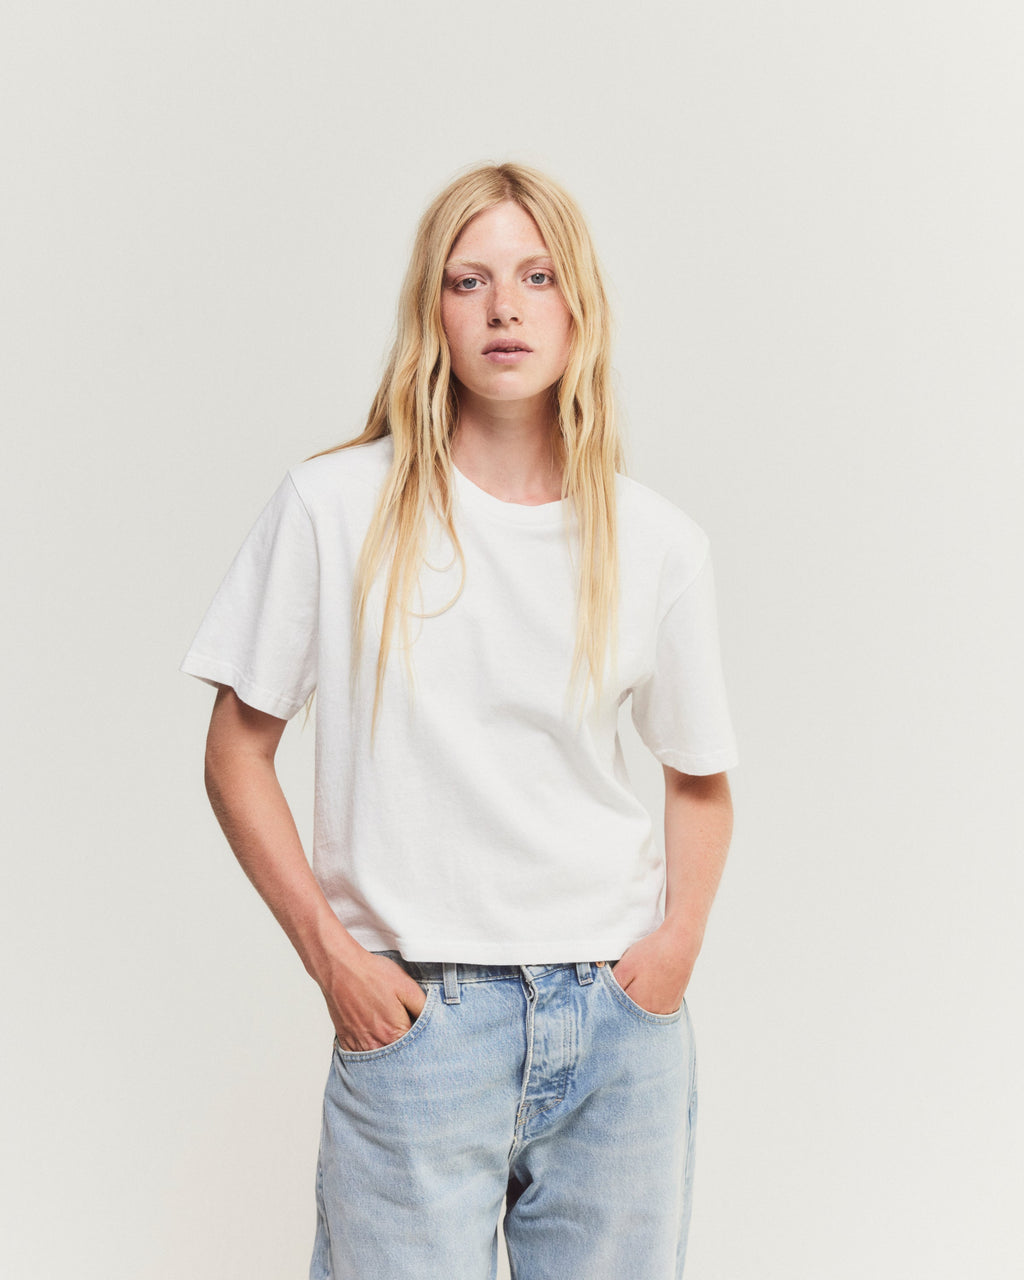 Tenue. Zoe Optic White T-shirt S/S Women